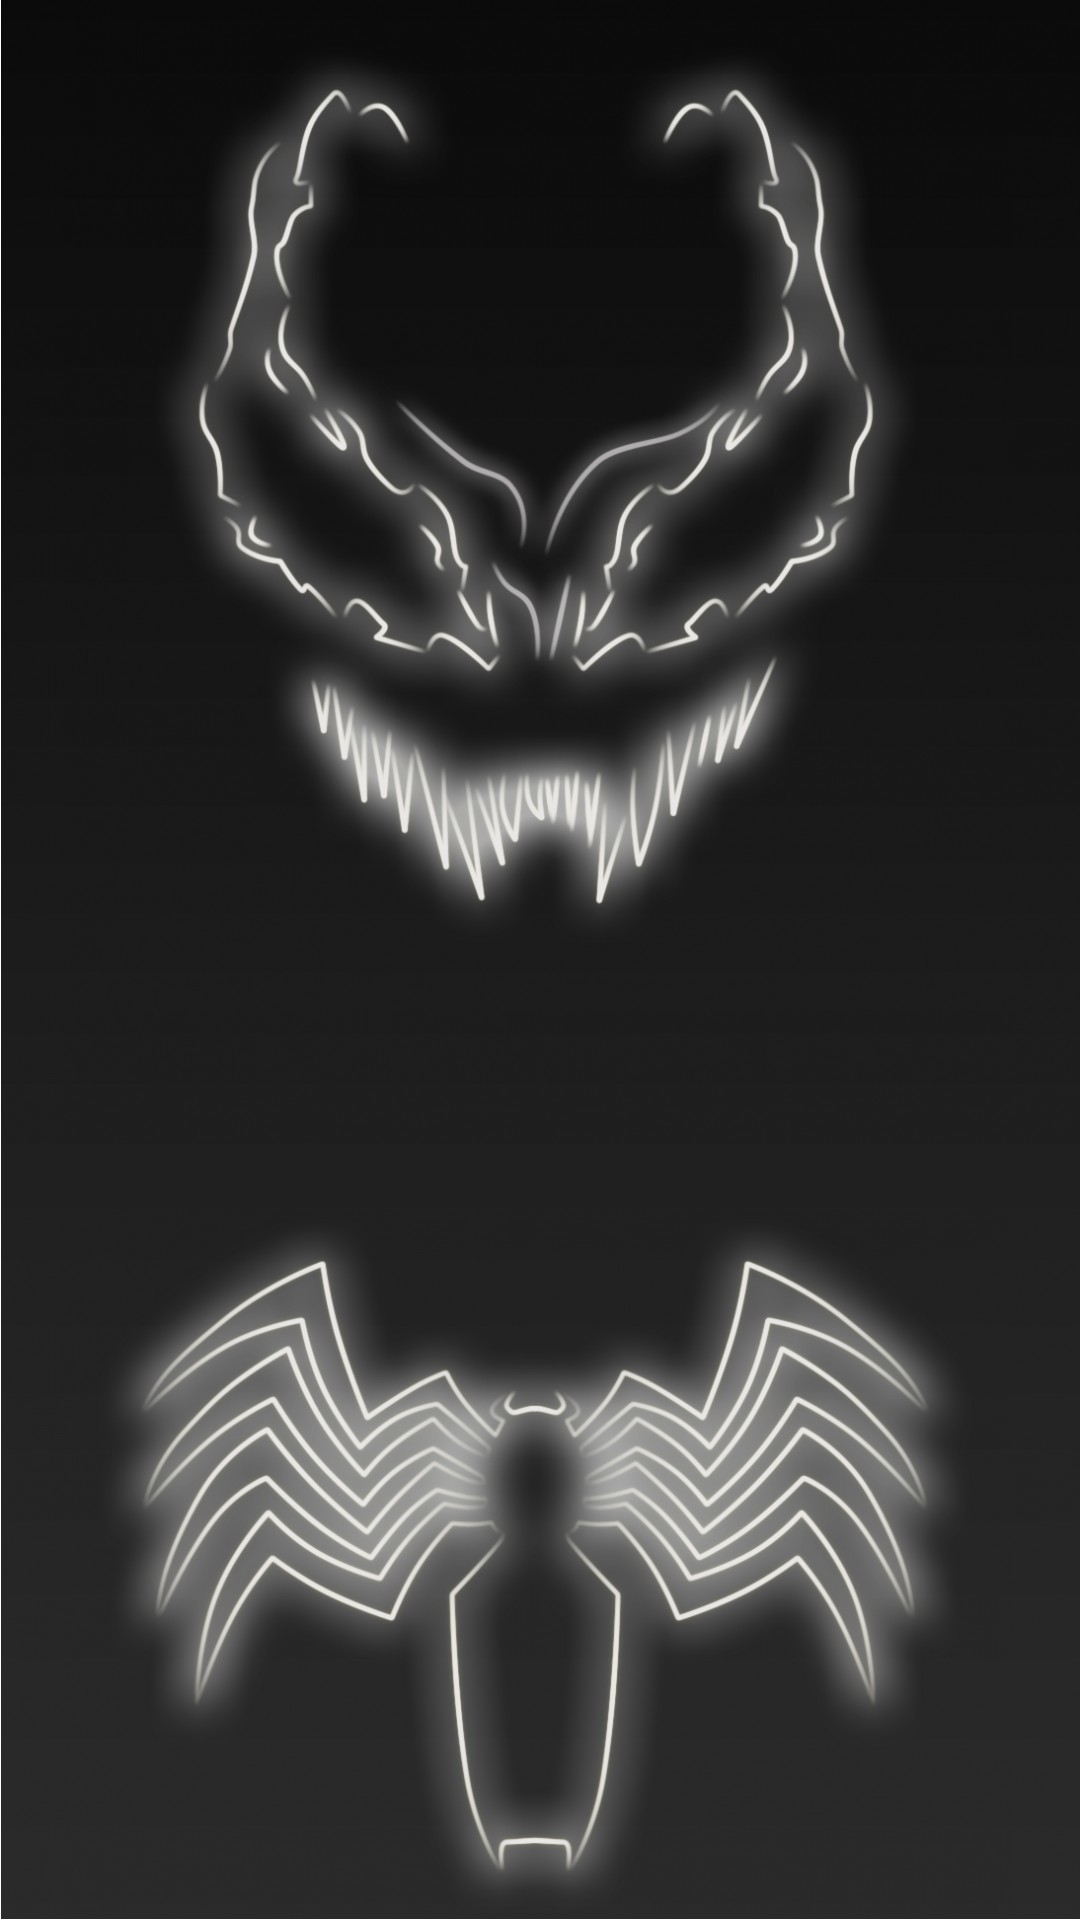 Cool Venom Wallpapers